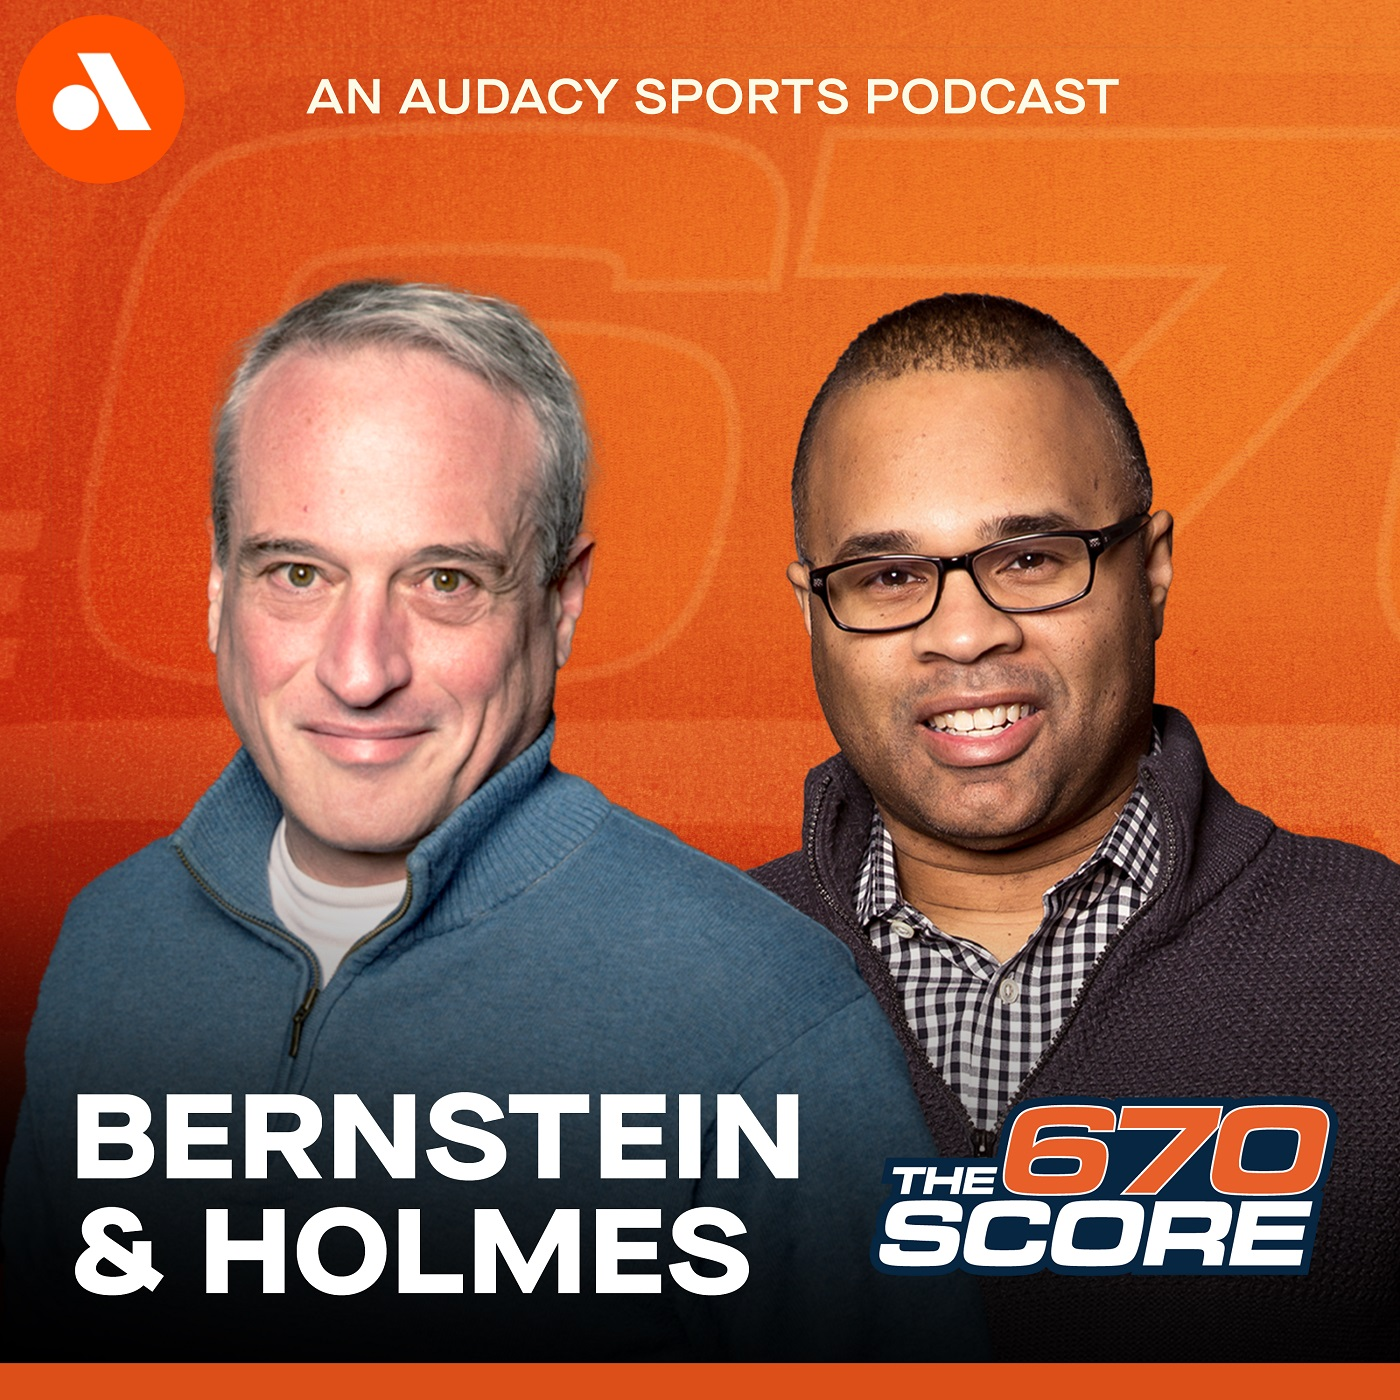 Bernstein: Terry Boers & Sam Monson interviews, who's QB1 for Bears? (Hour 3)